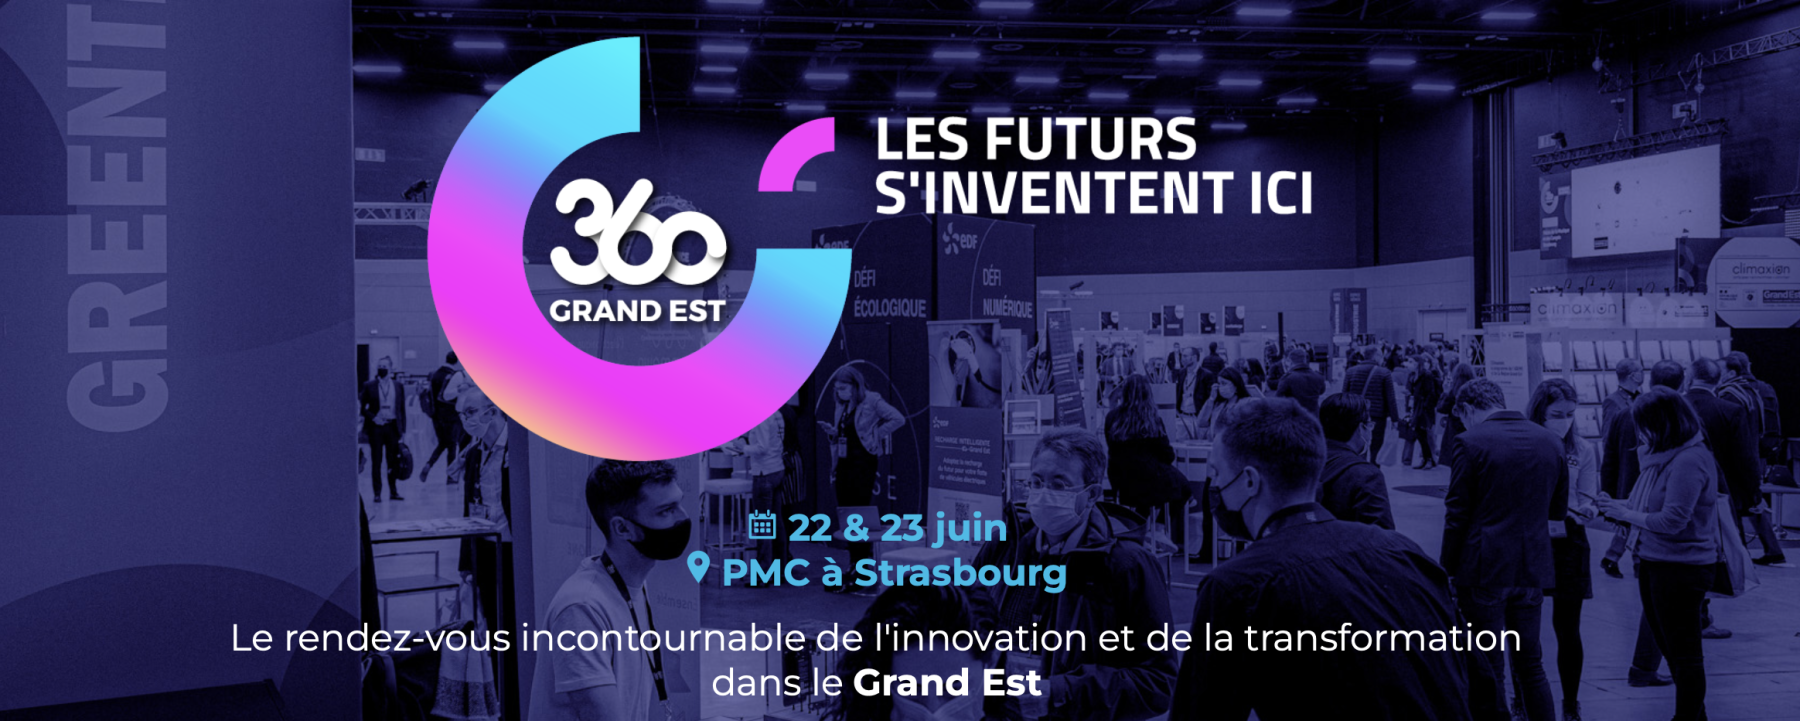 360 Grand Est - Edition 2023 : Les futurs s'inventent ici 